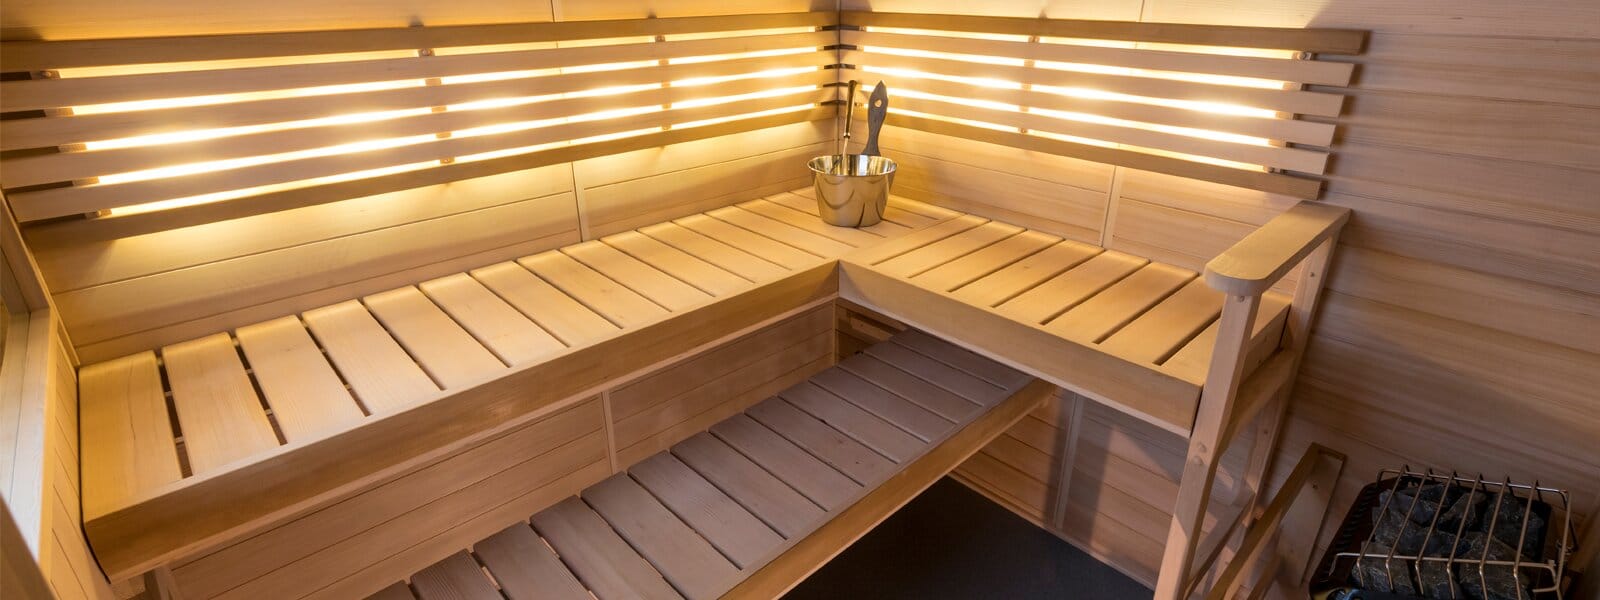 saunas finnleo 12